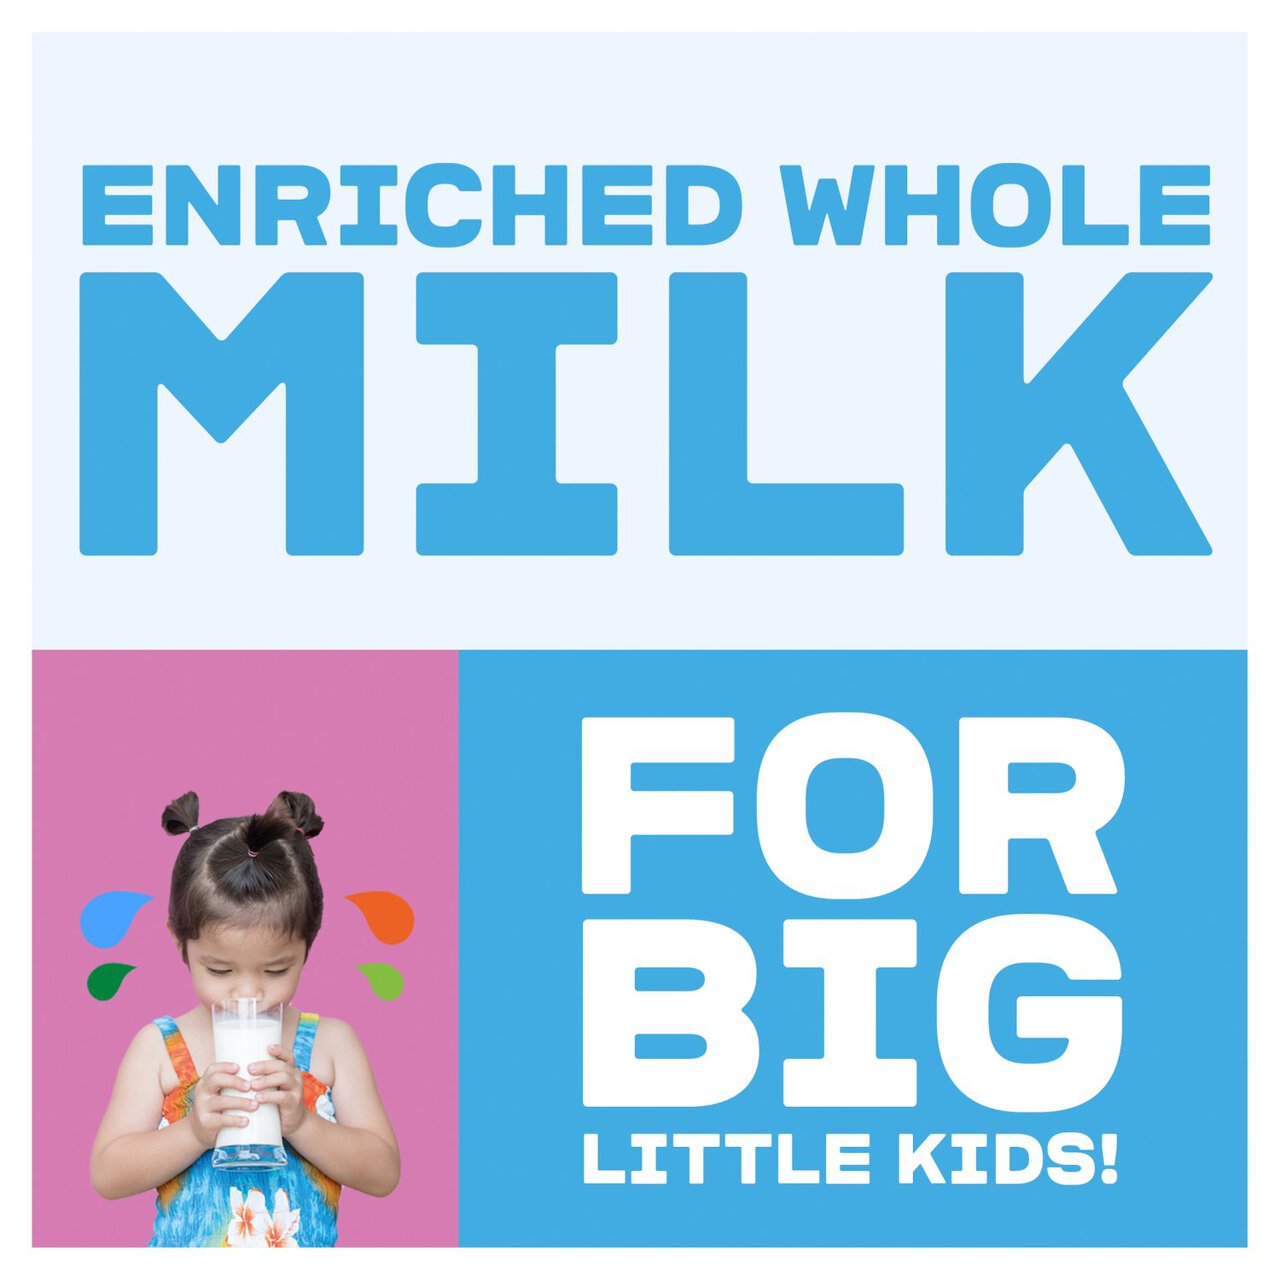 Arla Big Milk Vitamin Enriched Whole Milk for Kids 1+ 2l